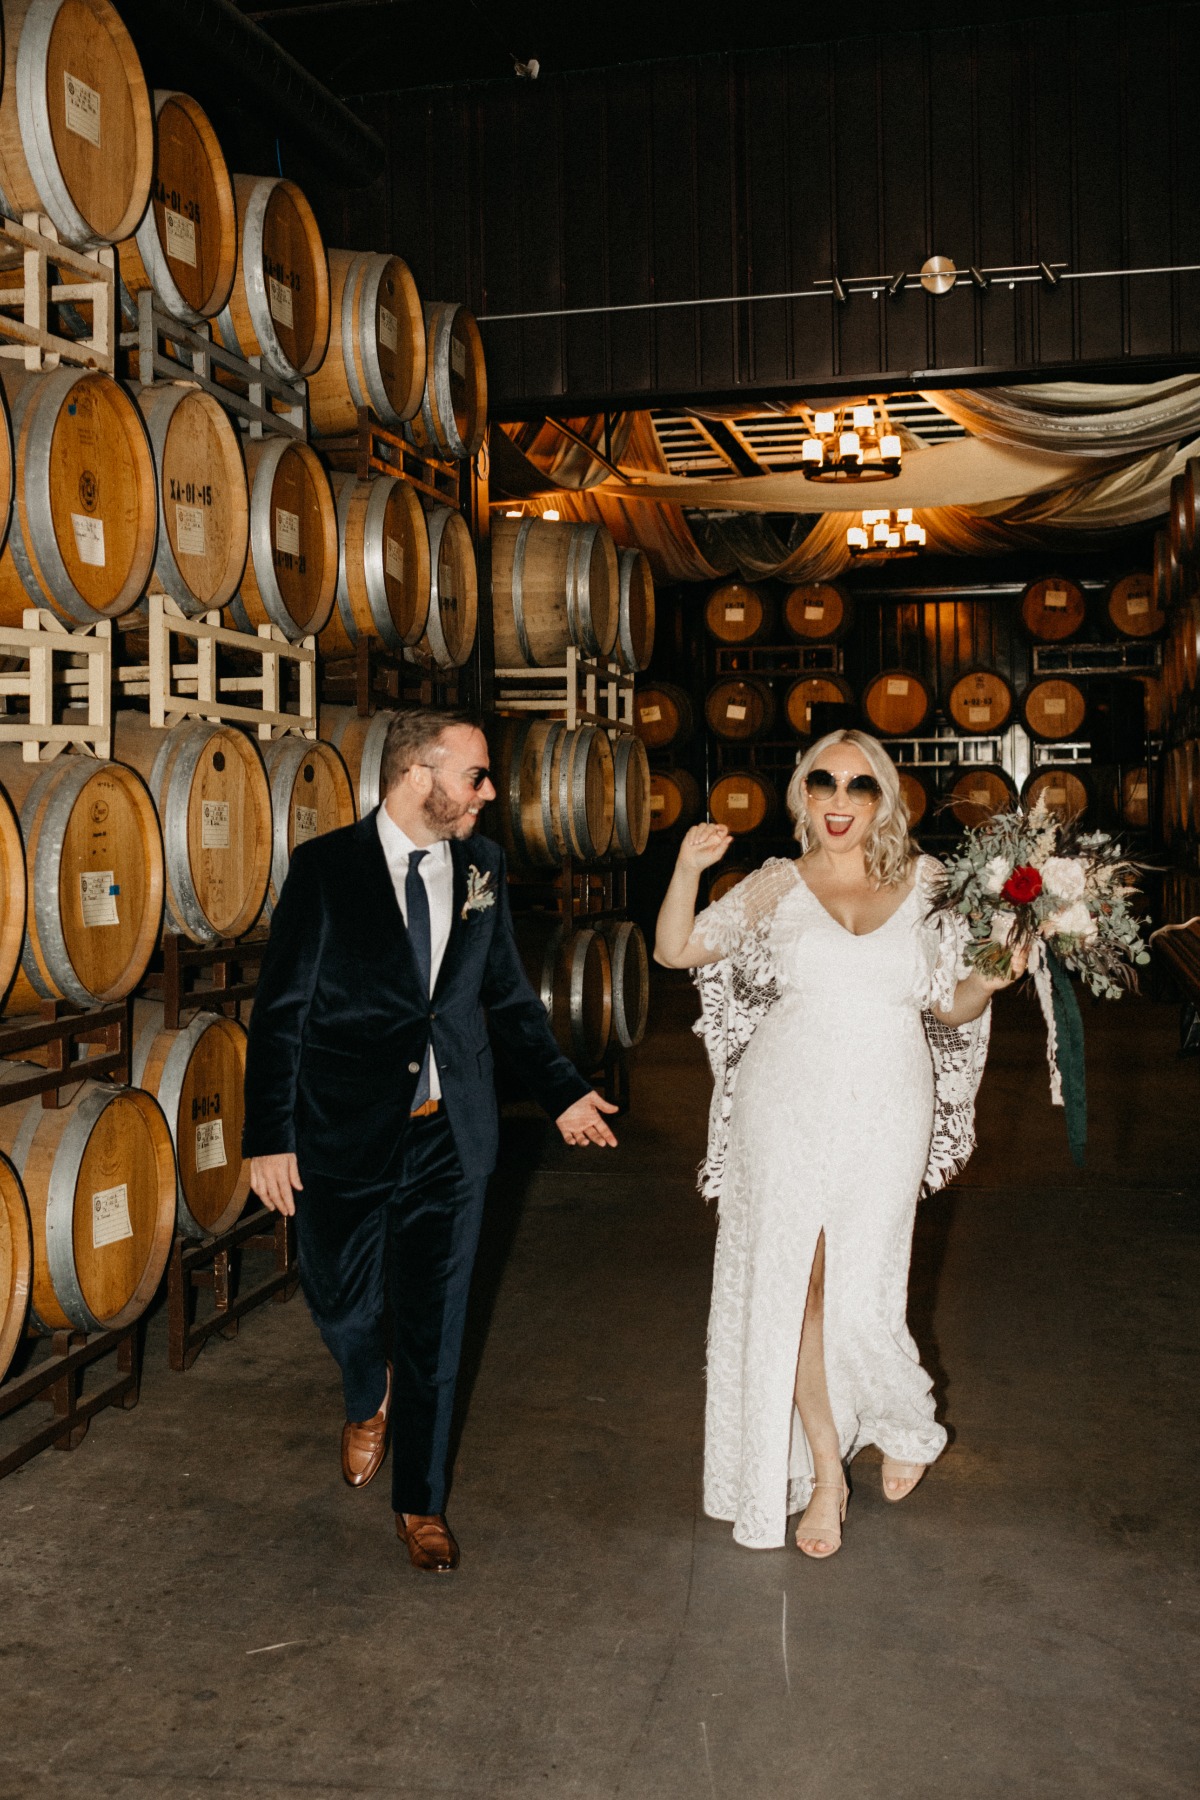 fun wedding portrait at Mount Palomar winery in San Diego